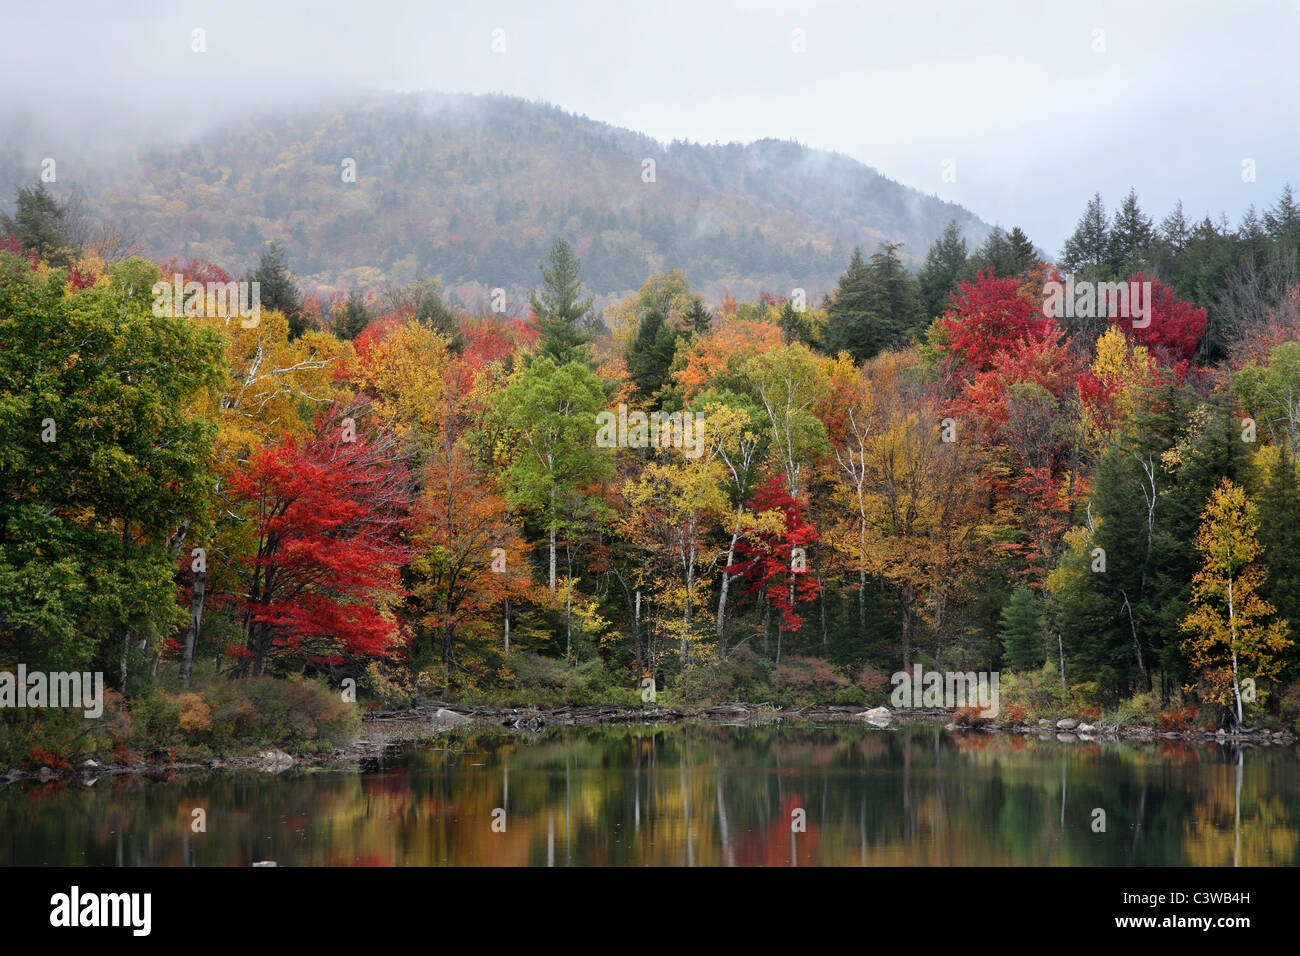 Upstate New York: Adirondack mountains(2048x771) • /r